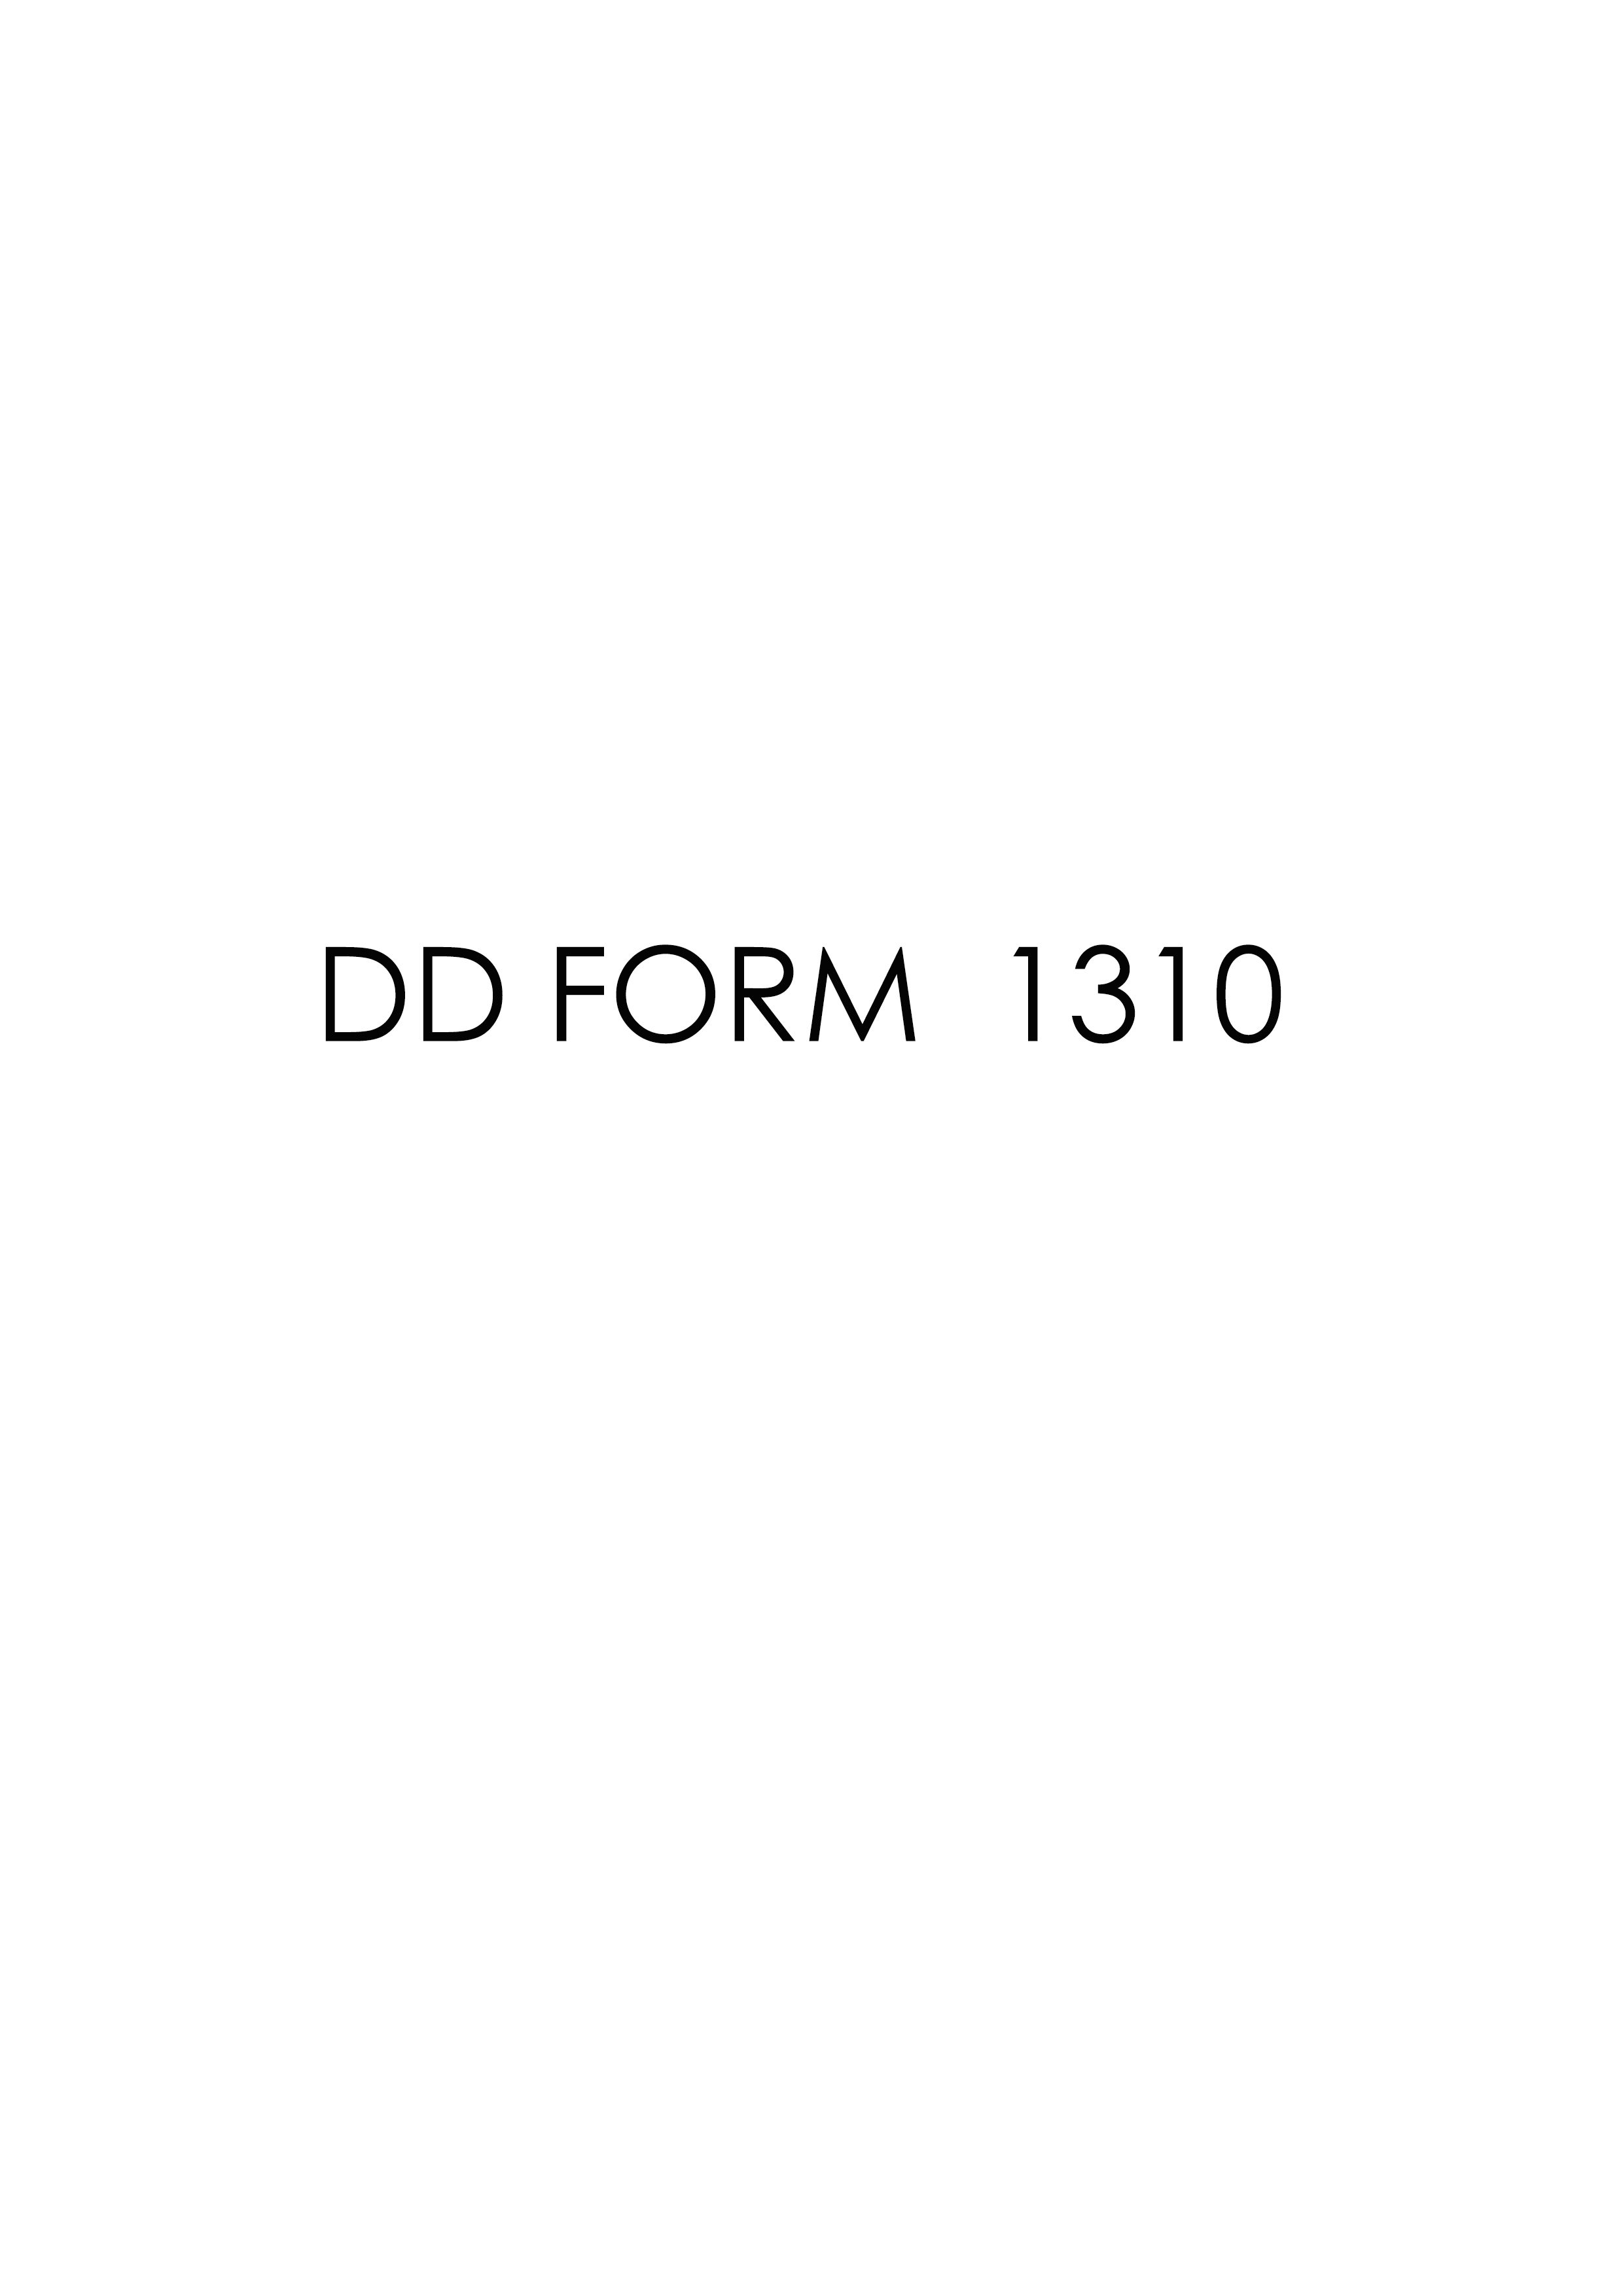 Download dd Form 1310